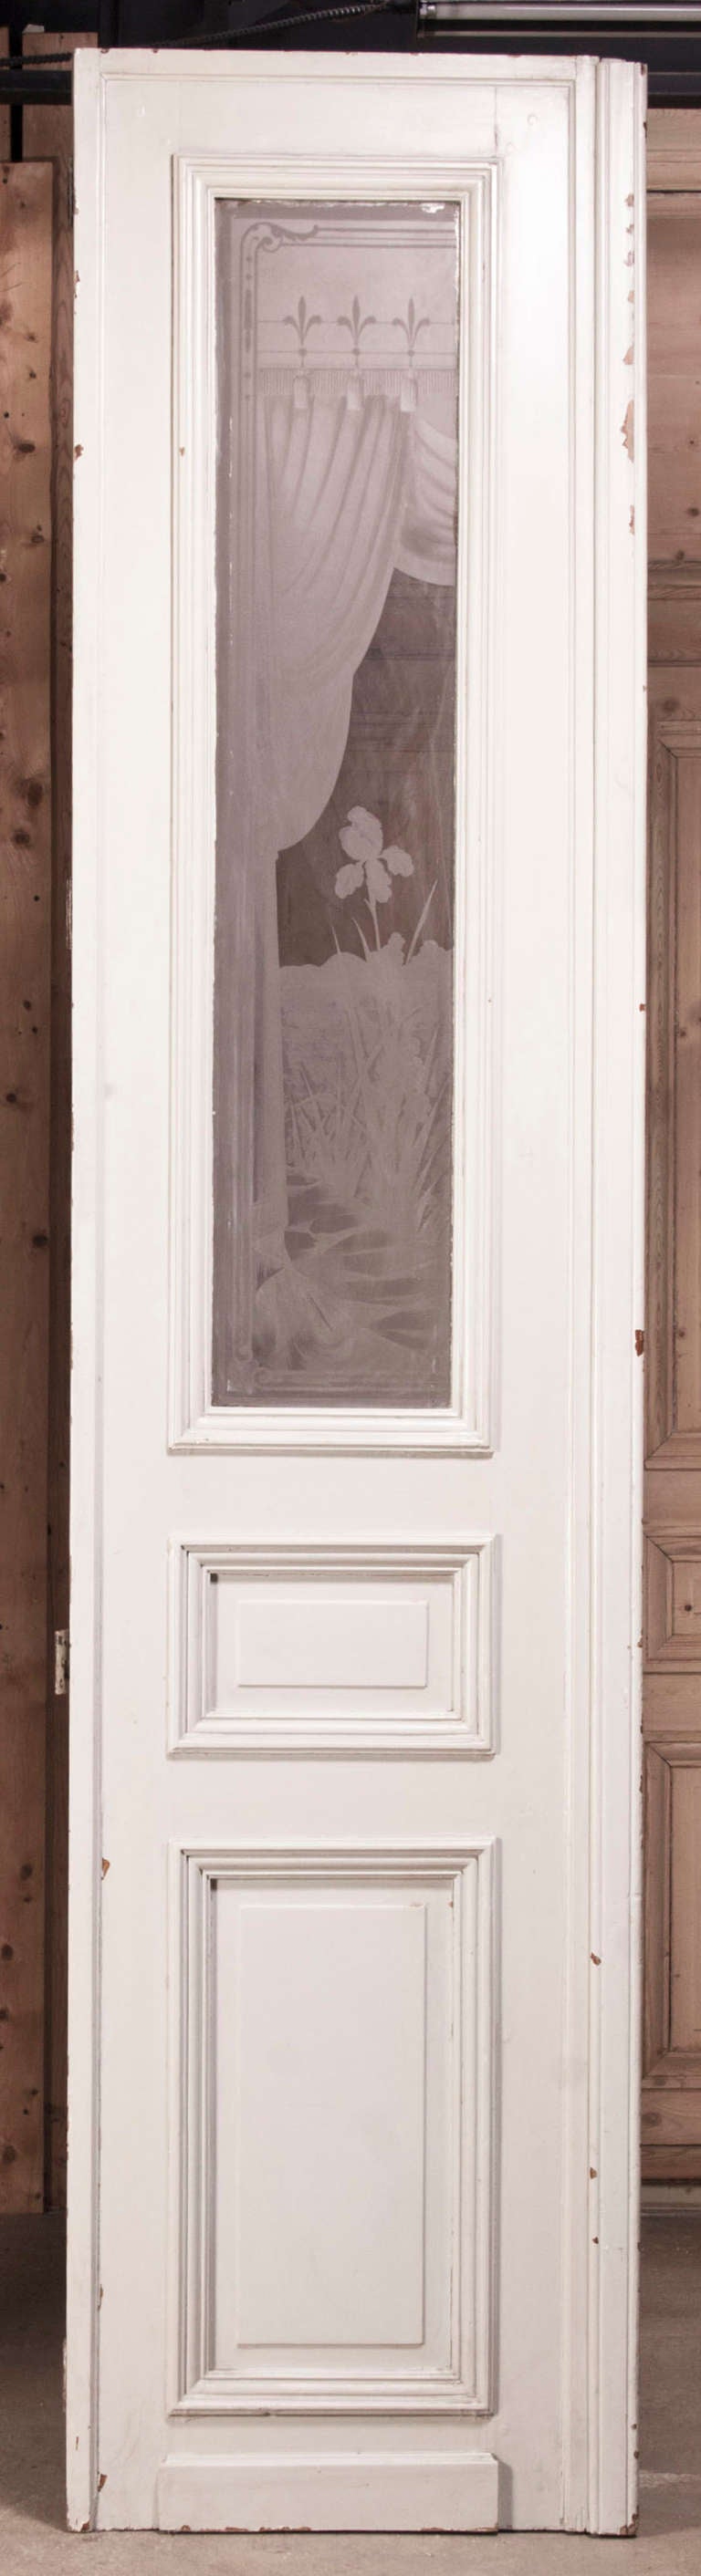 vintage etched glass doors